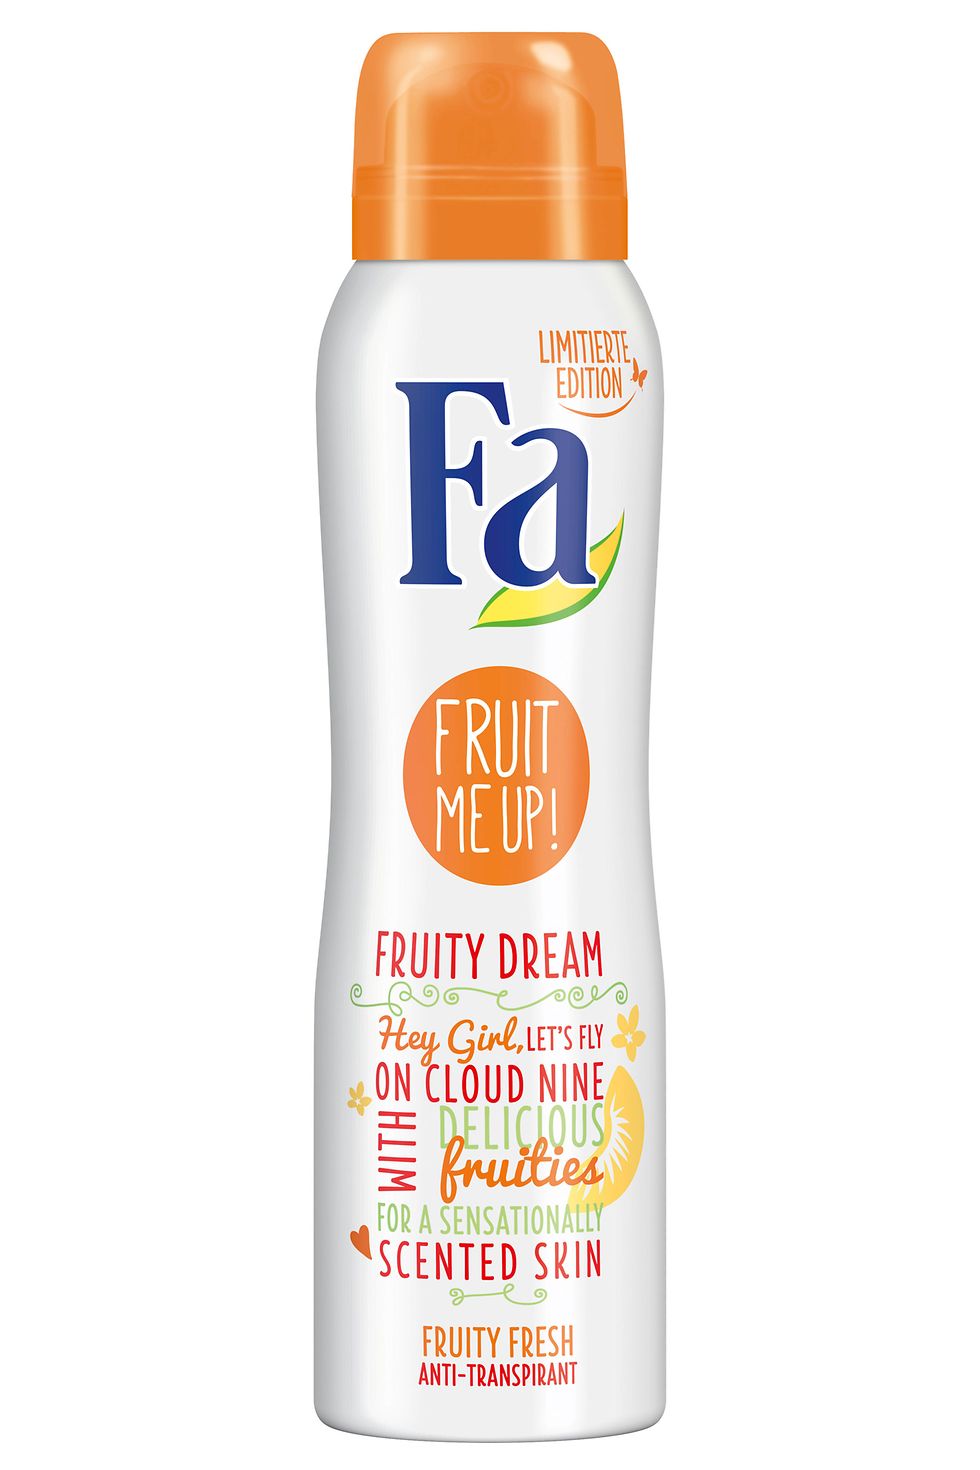 Fa Fruit me up! Fruity Dream Anti-Transpirant